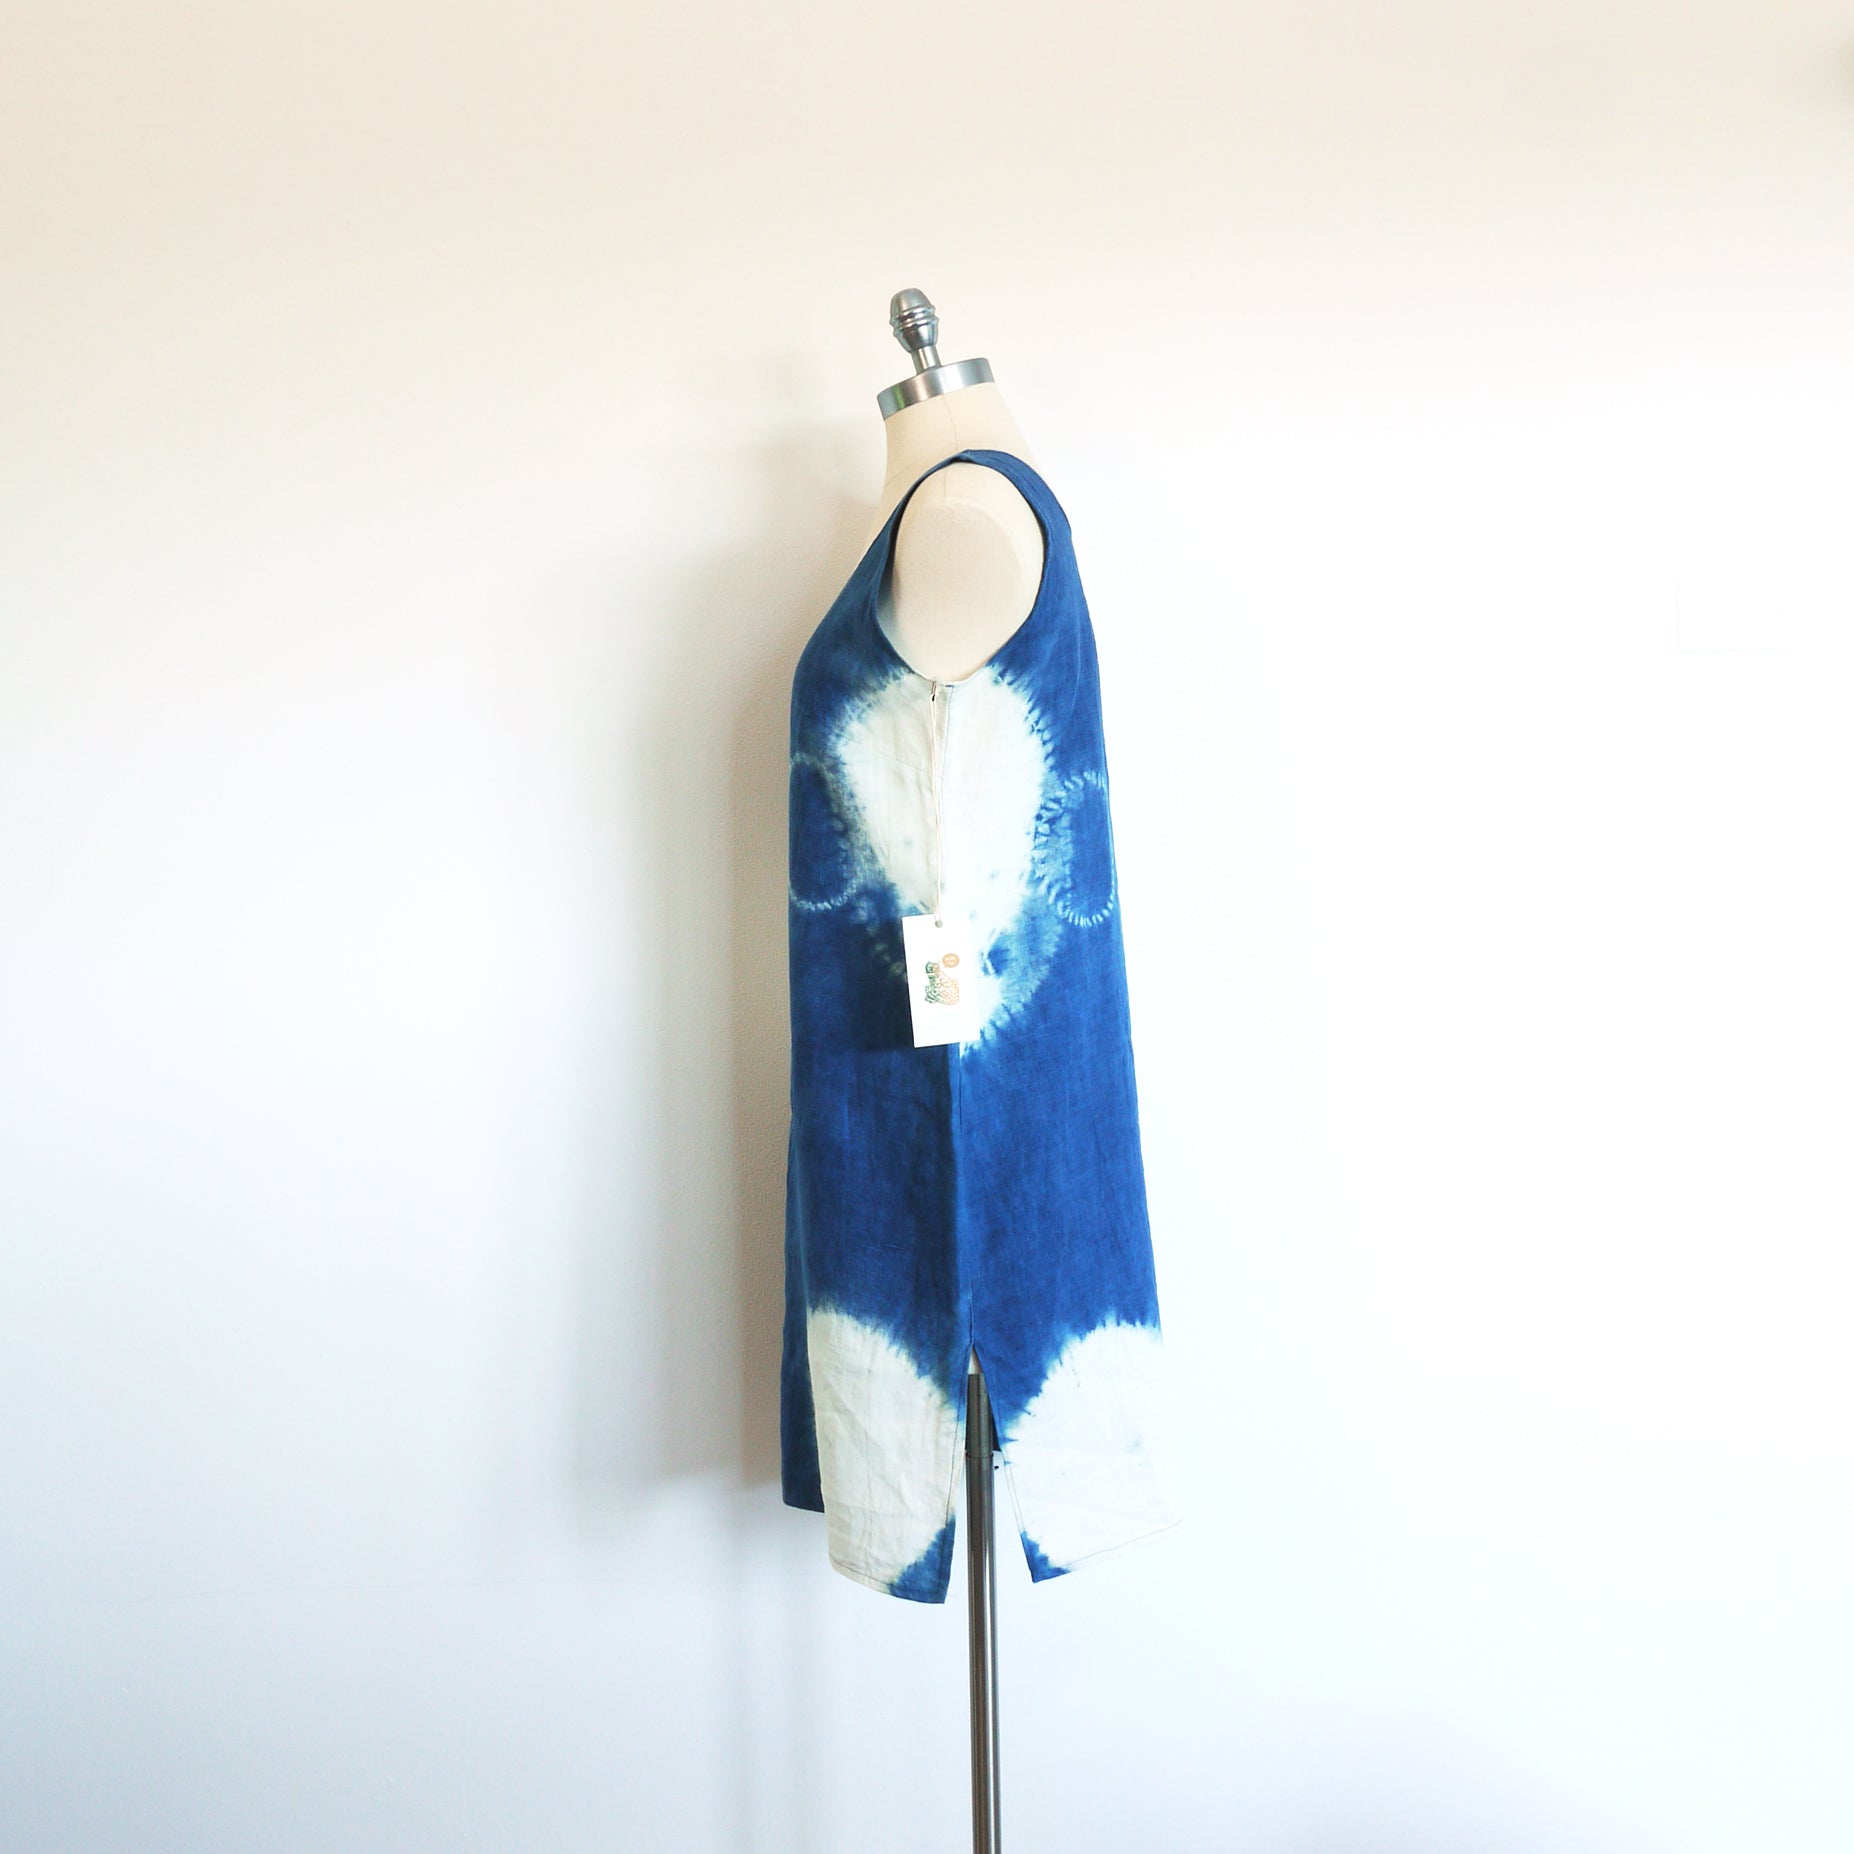 INDIGO CIRCLE tank dress.  Hand dyed shibori indigo linen dress